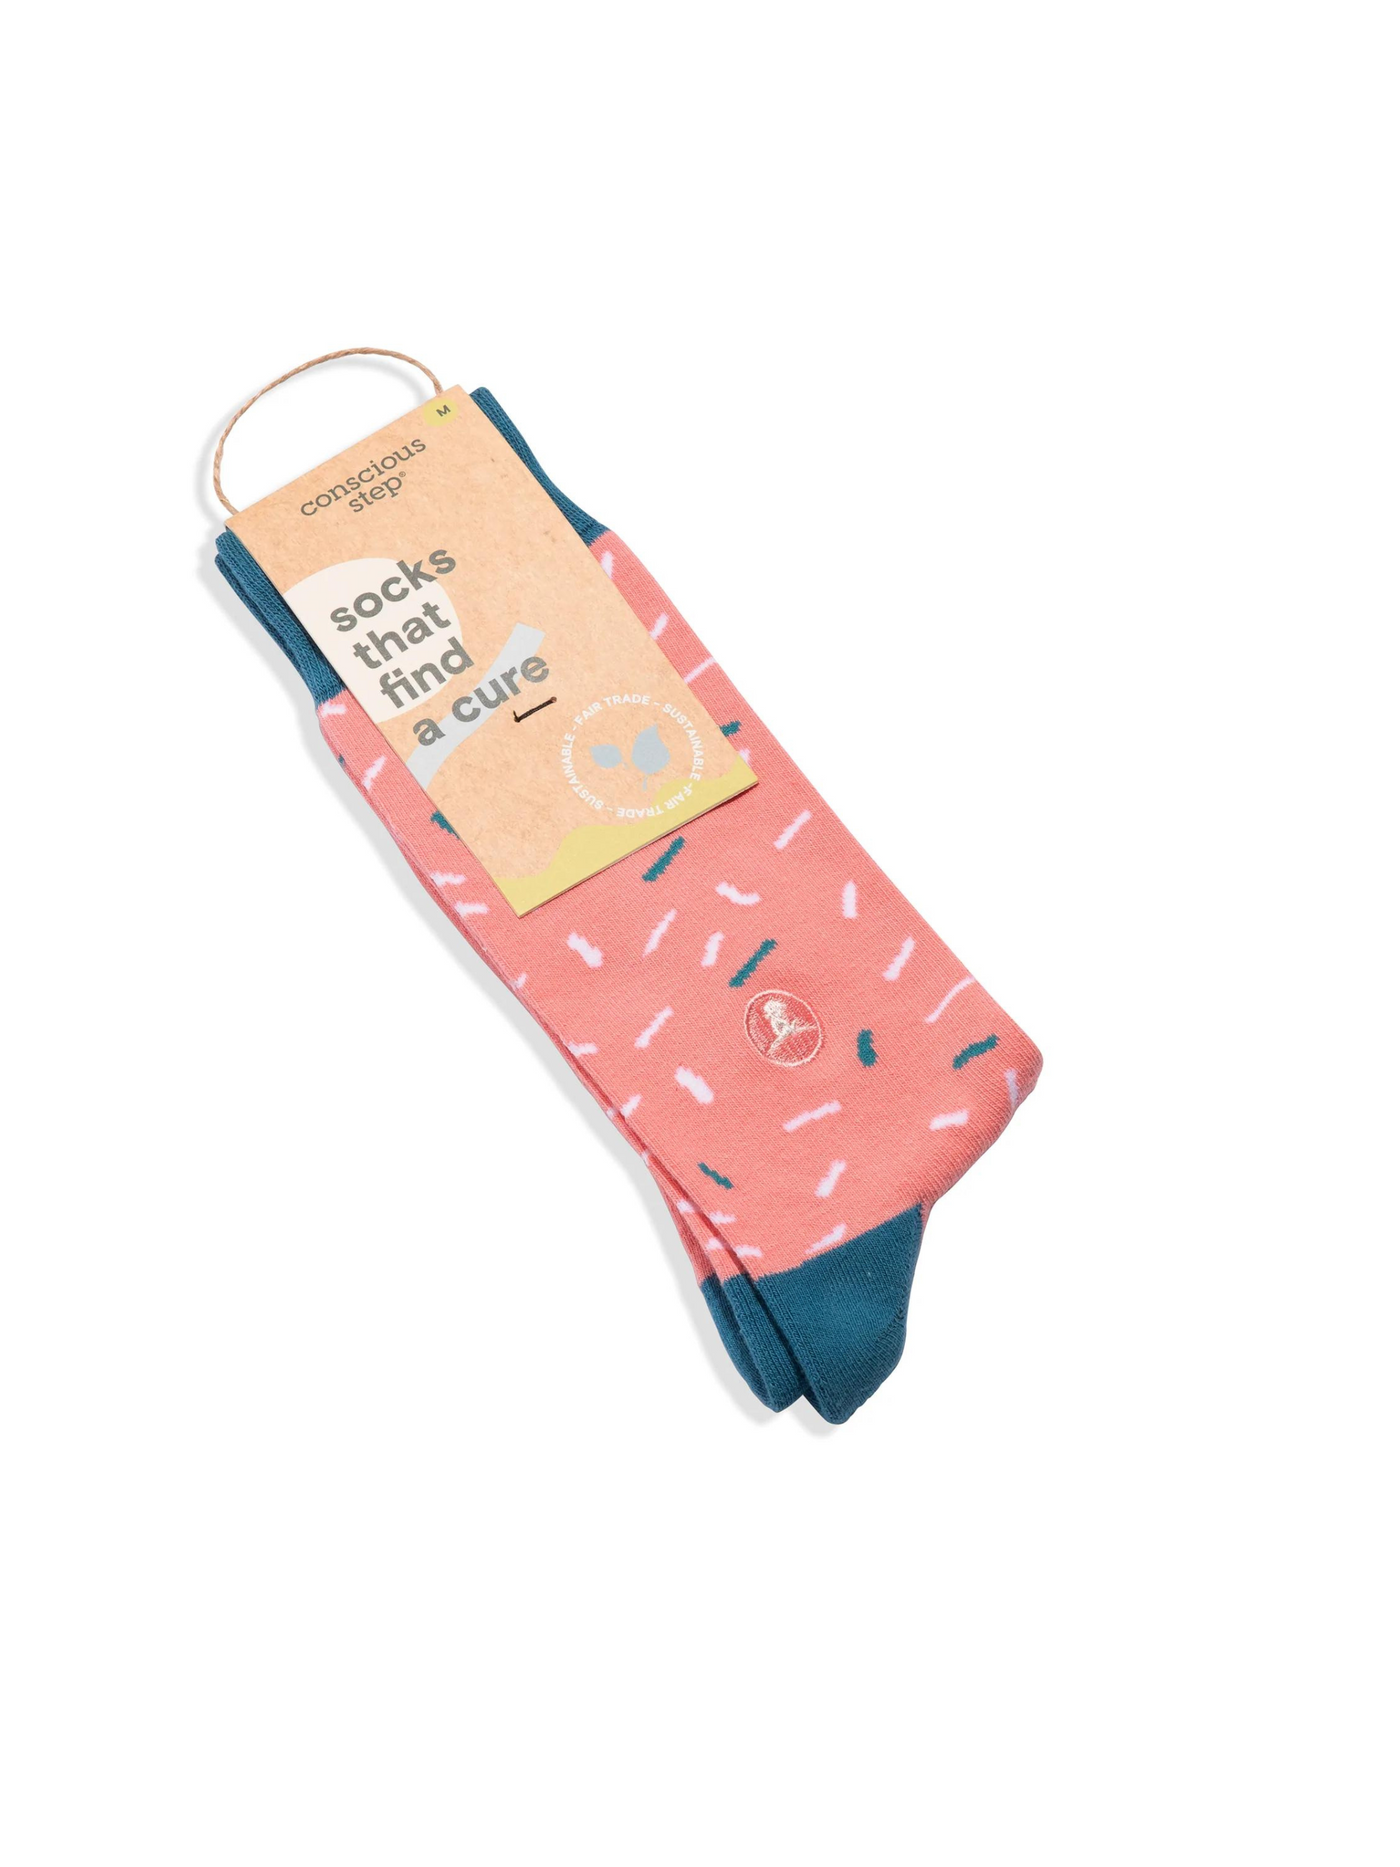 pink socks